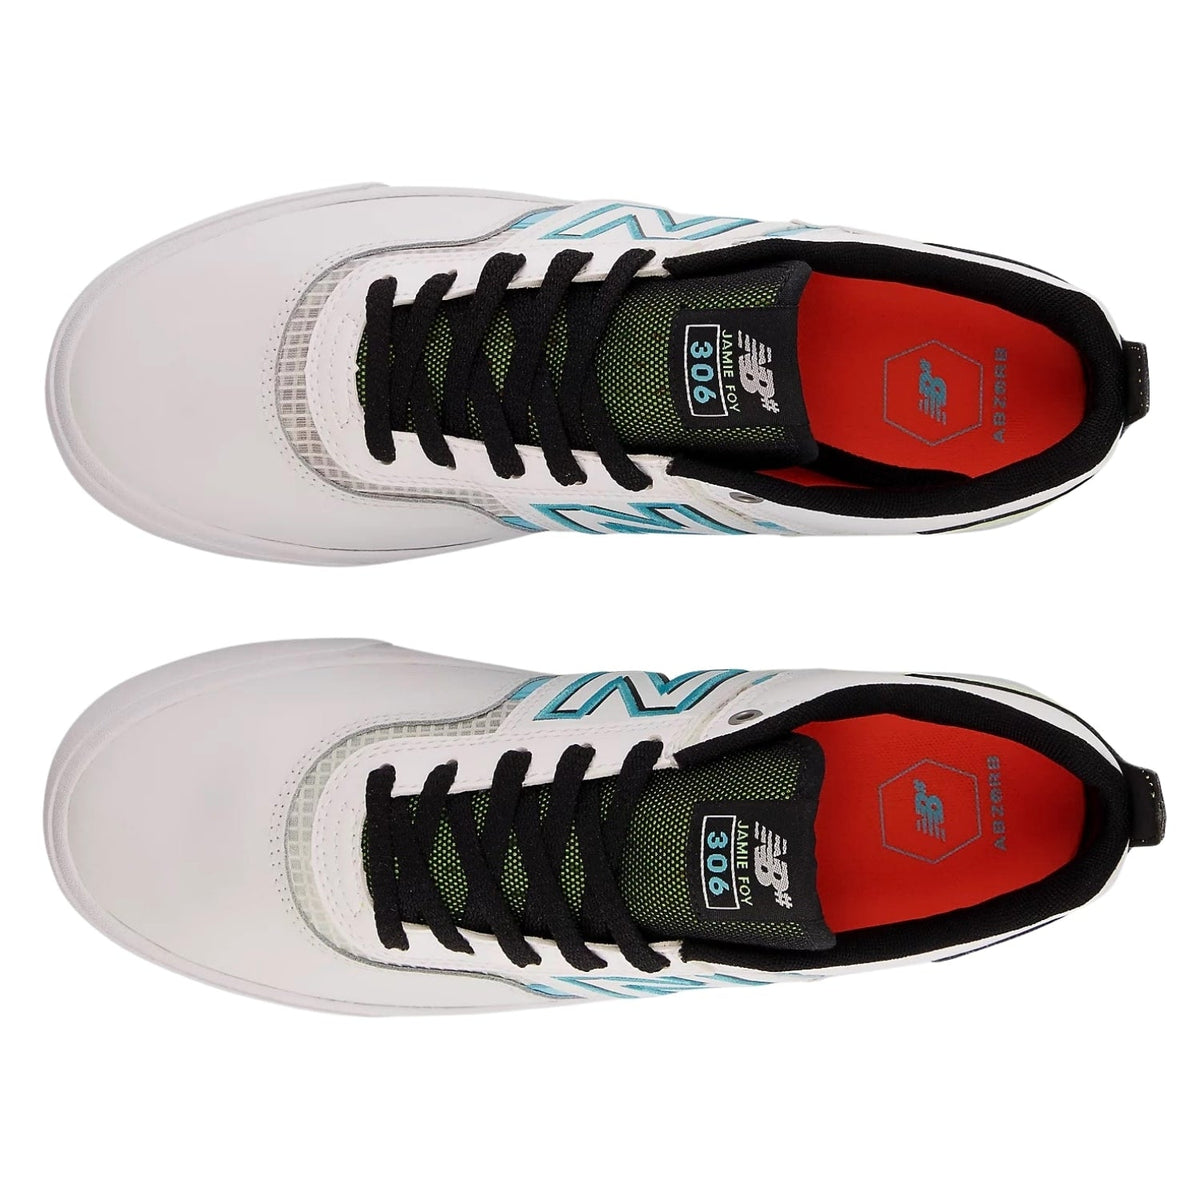 New Balance Numeric Nm306 Jamie Foy Signature Skate Shoes - White/Aqua Sky - Mens Skate Shoes by New Balance Numeric